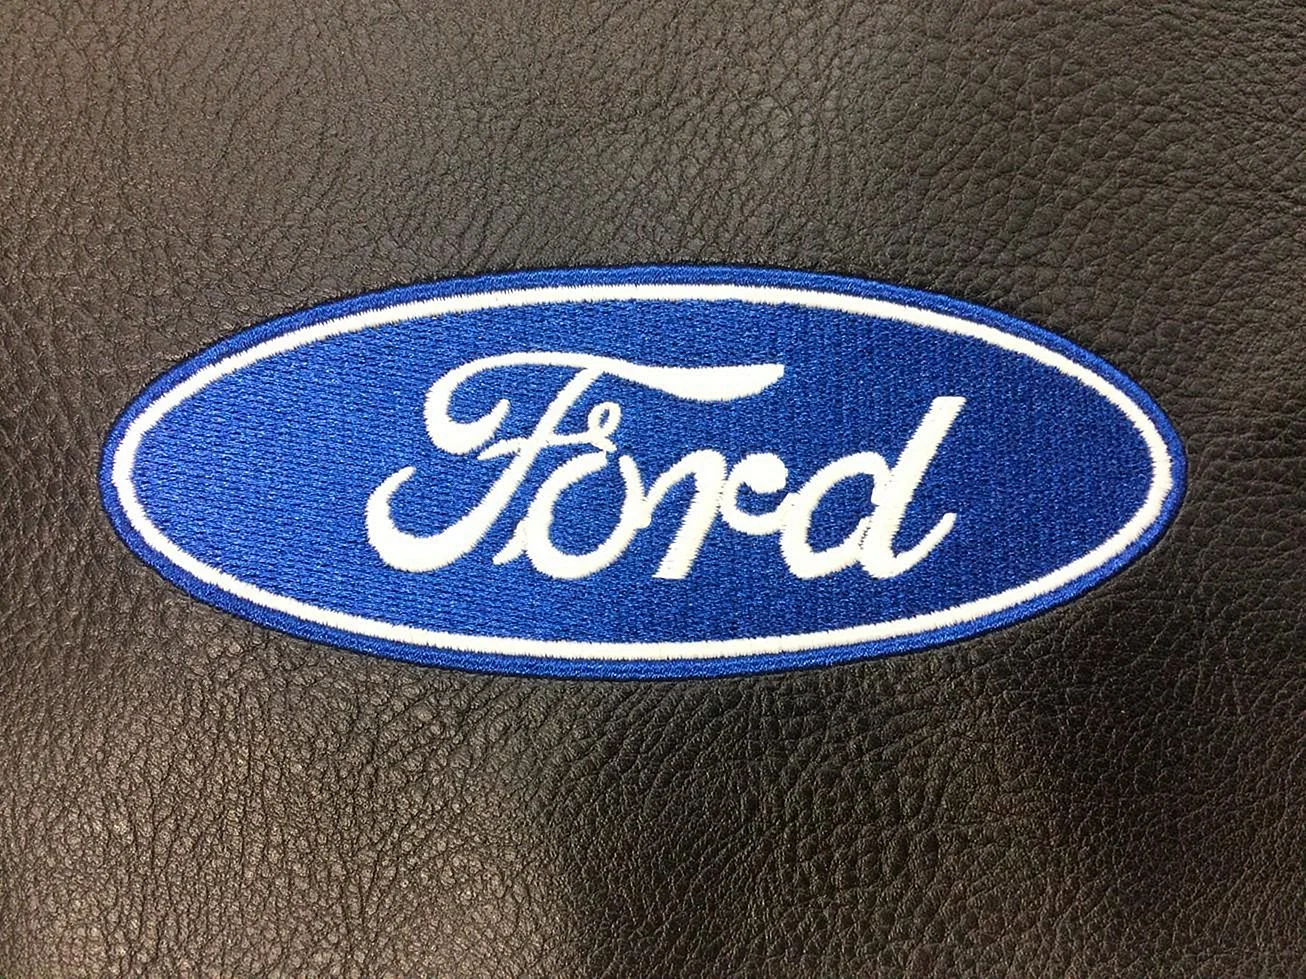 Вышивка логотипа на автомобильных чехлах